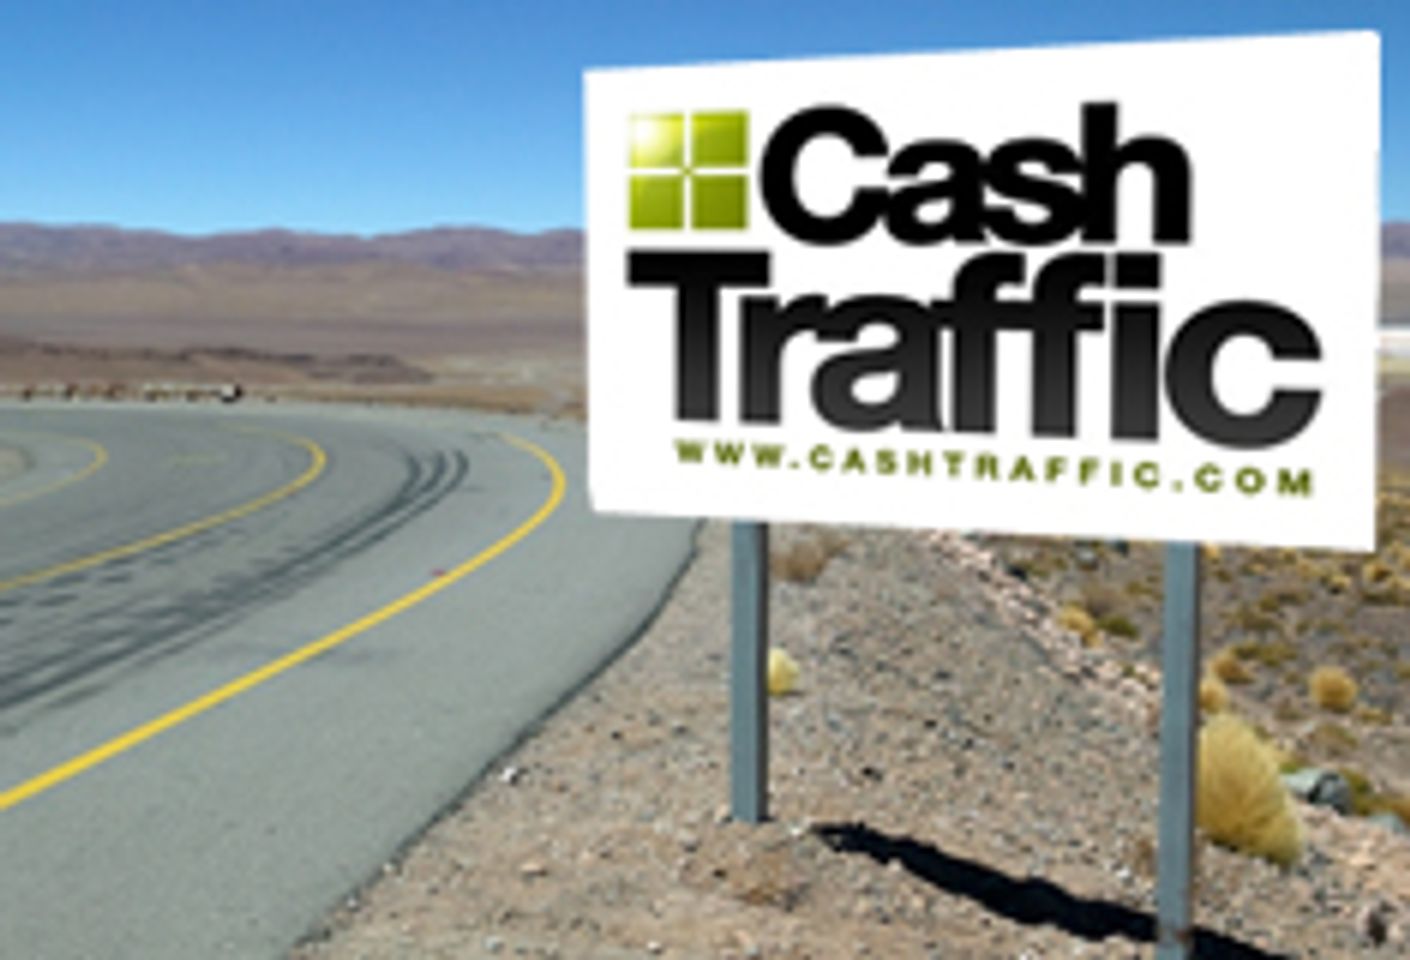 CECash Launches Cash Traffic